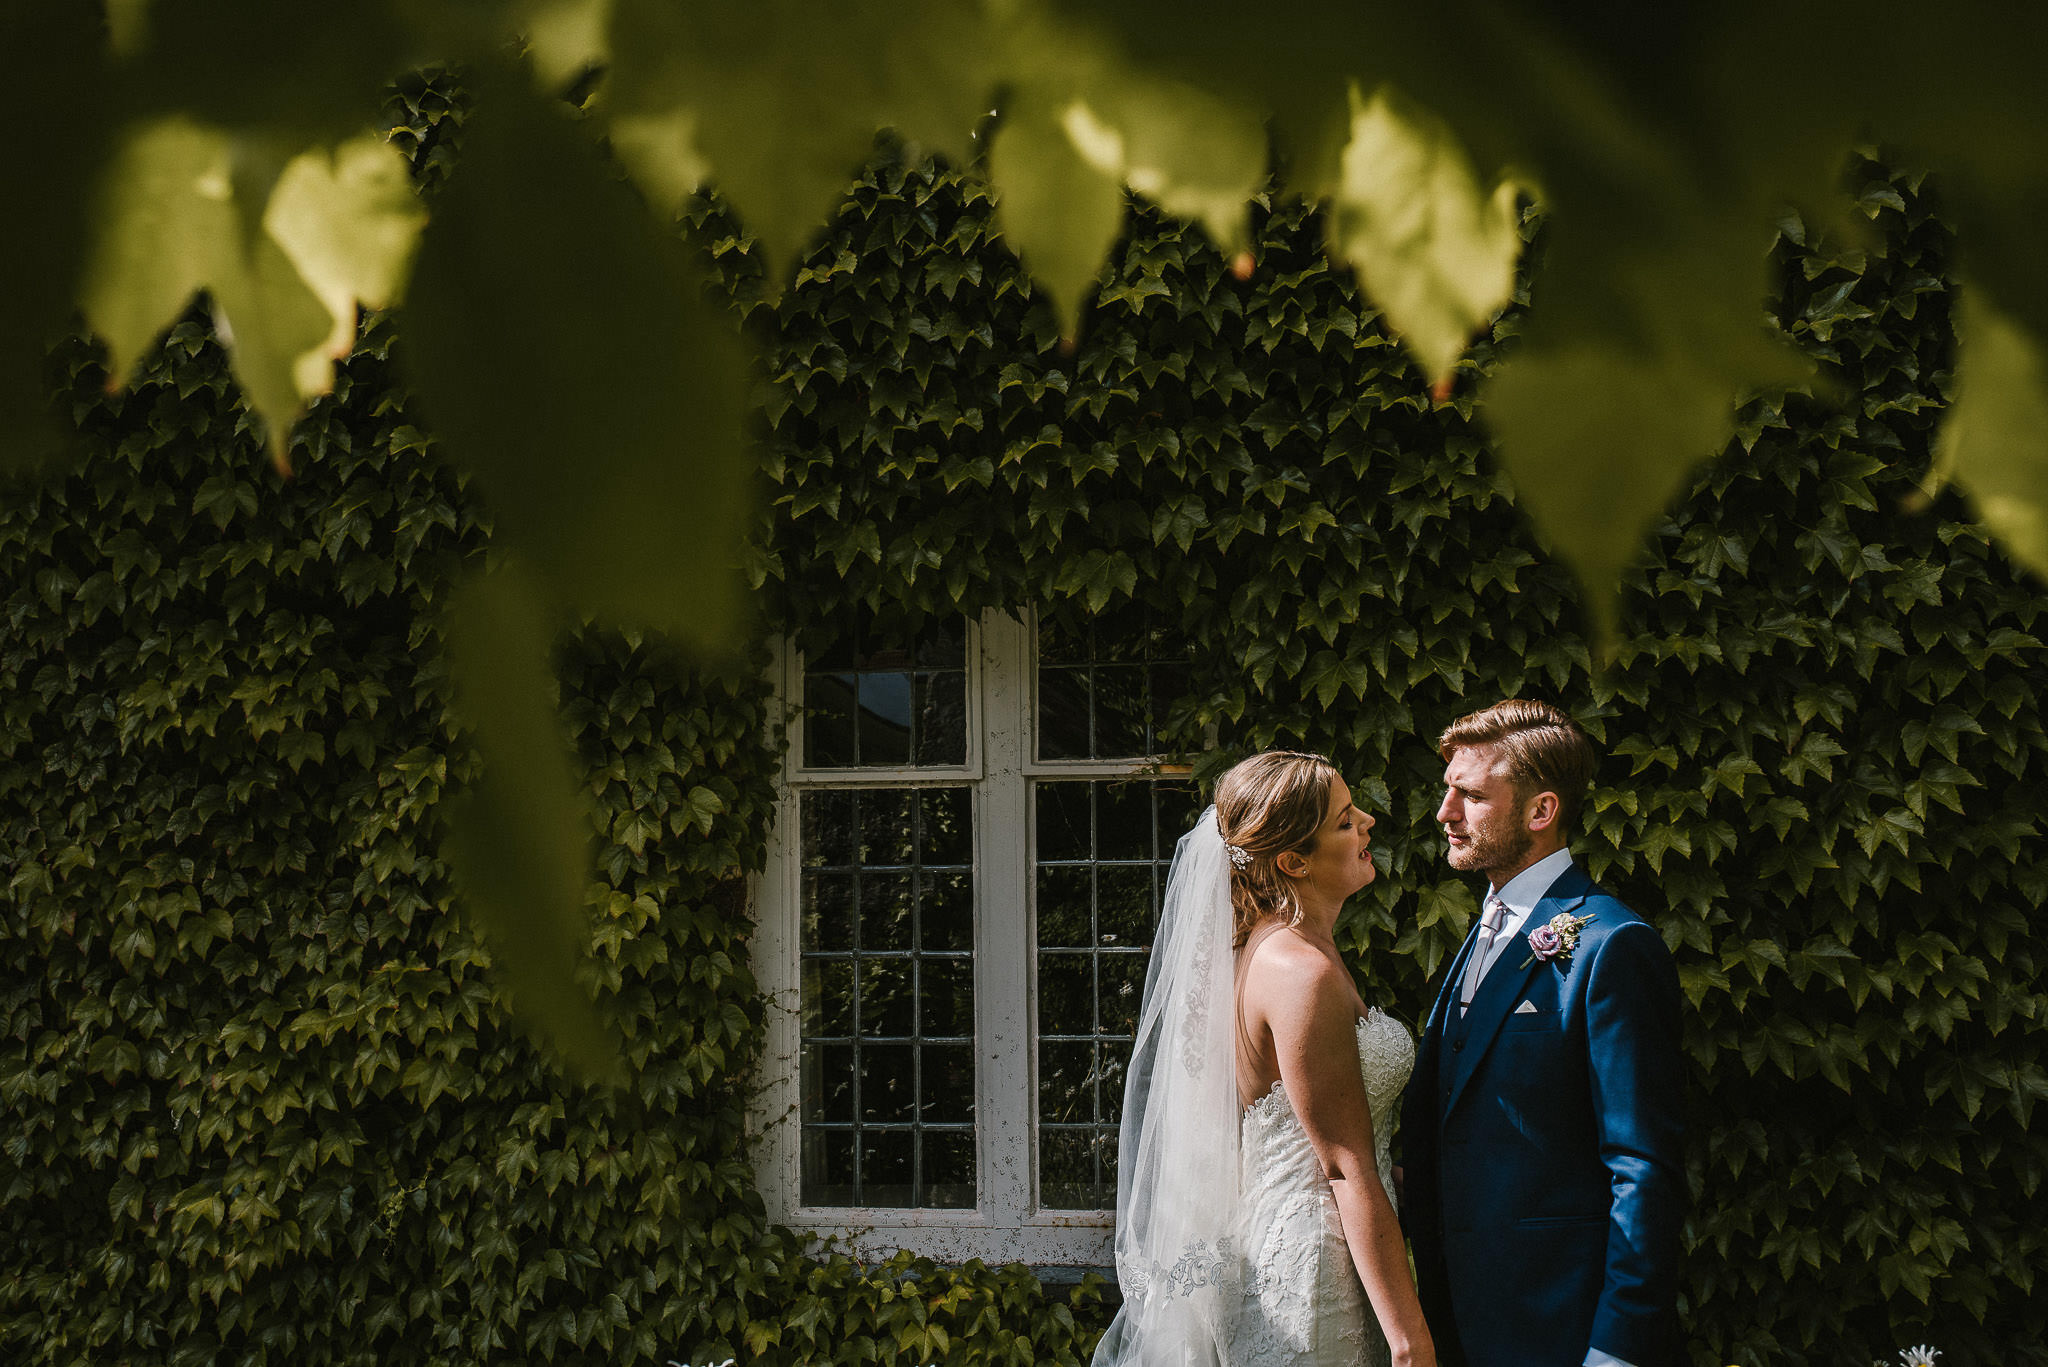 BEST-WEDDING-PHOTOGRAPHER-CORNWALL-2018-47.jpg